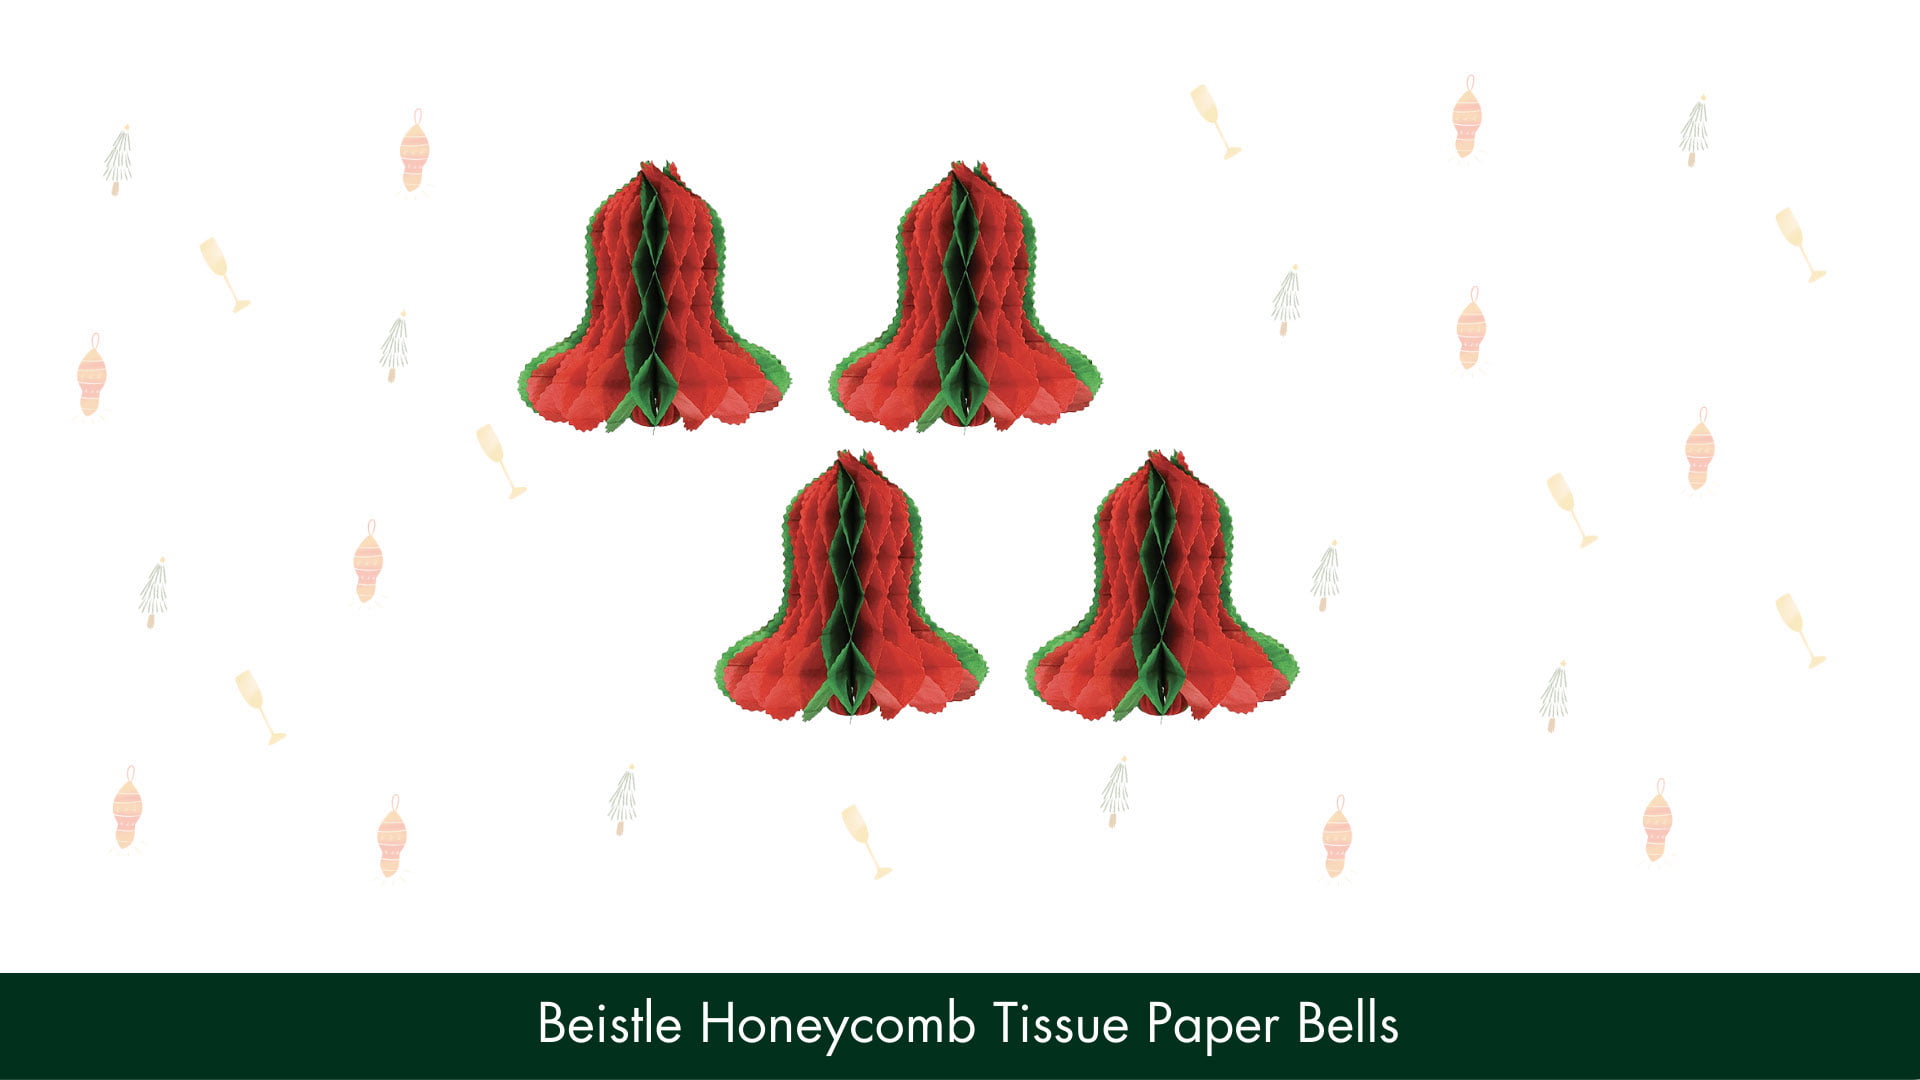 Beistle Honeycomb Tissue Paper Bells